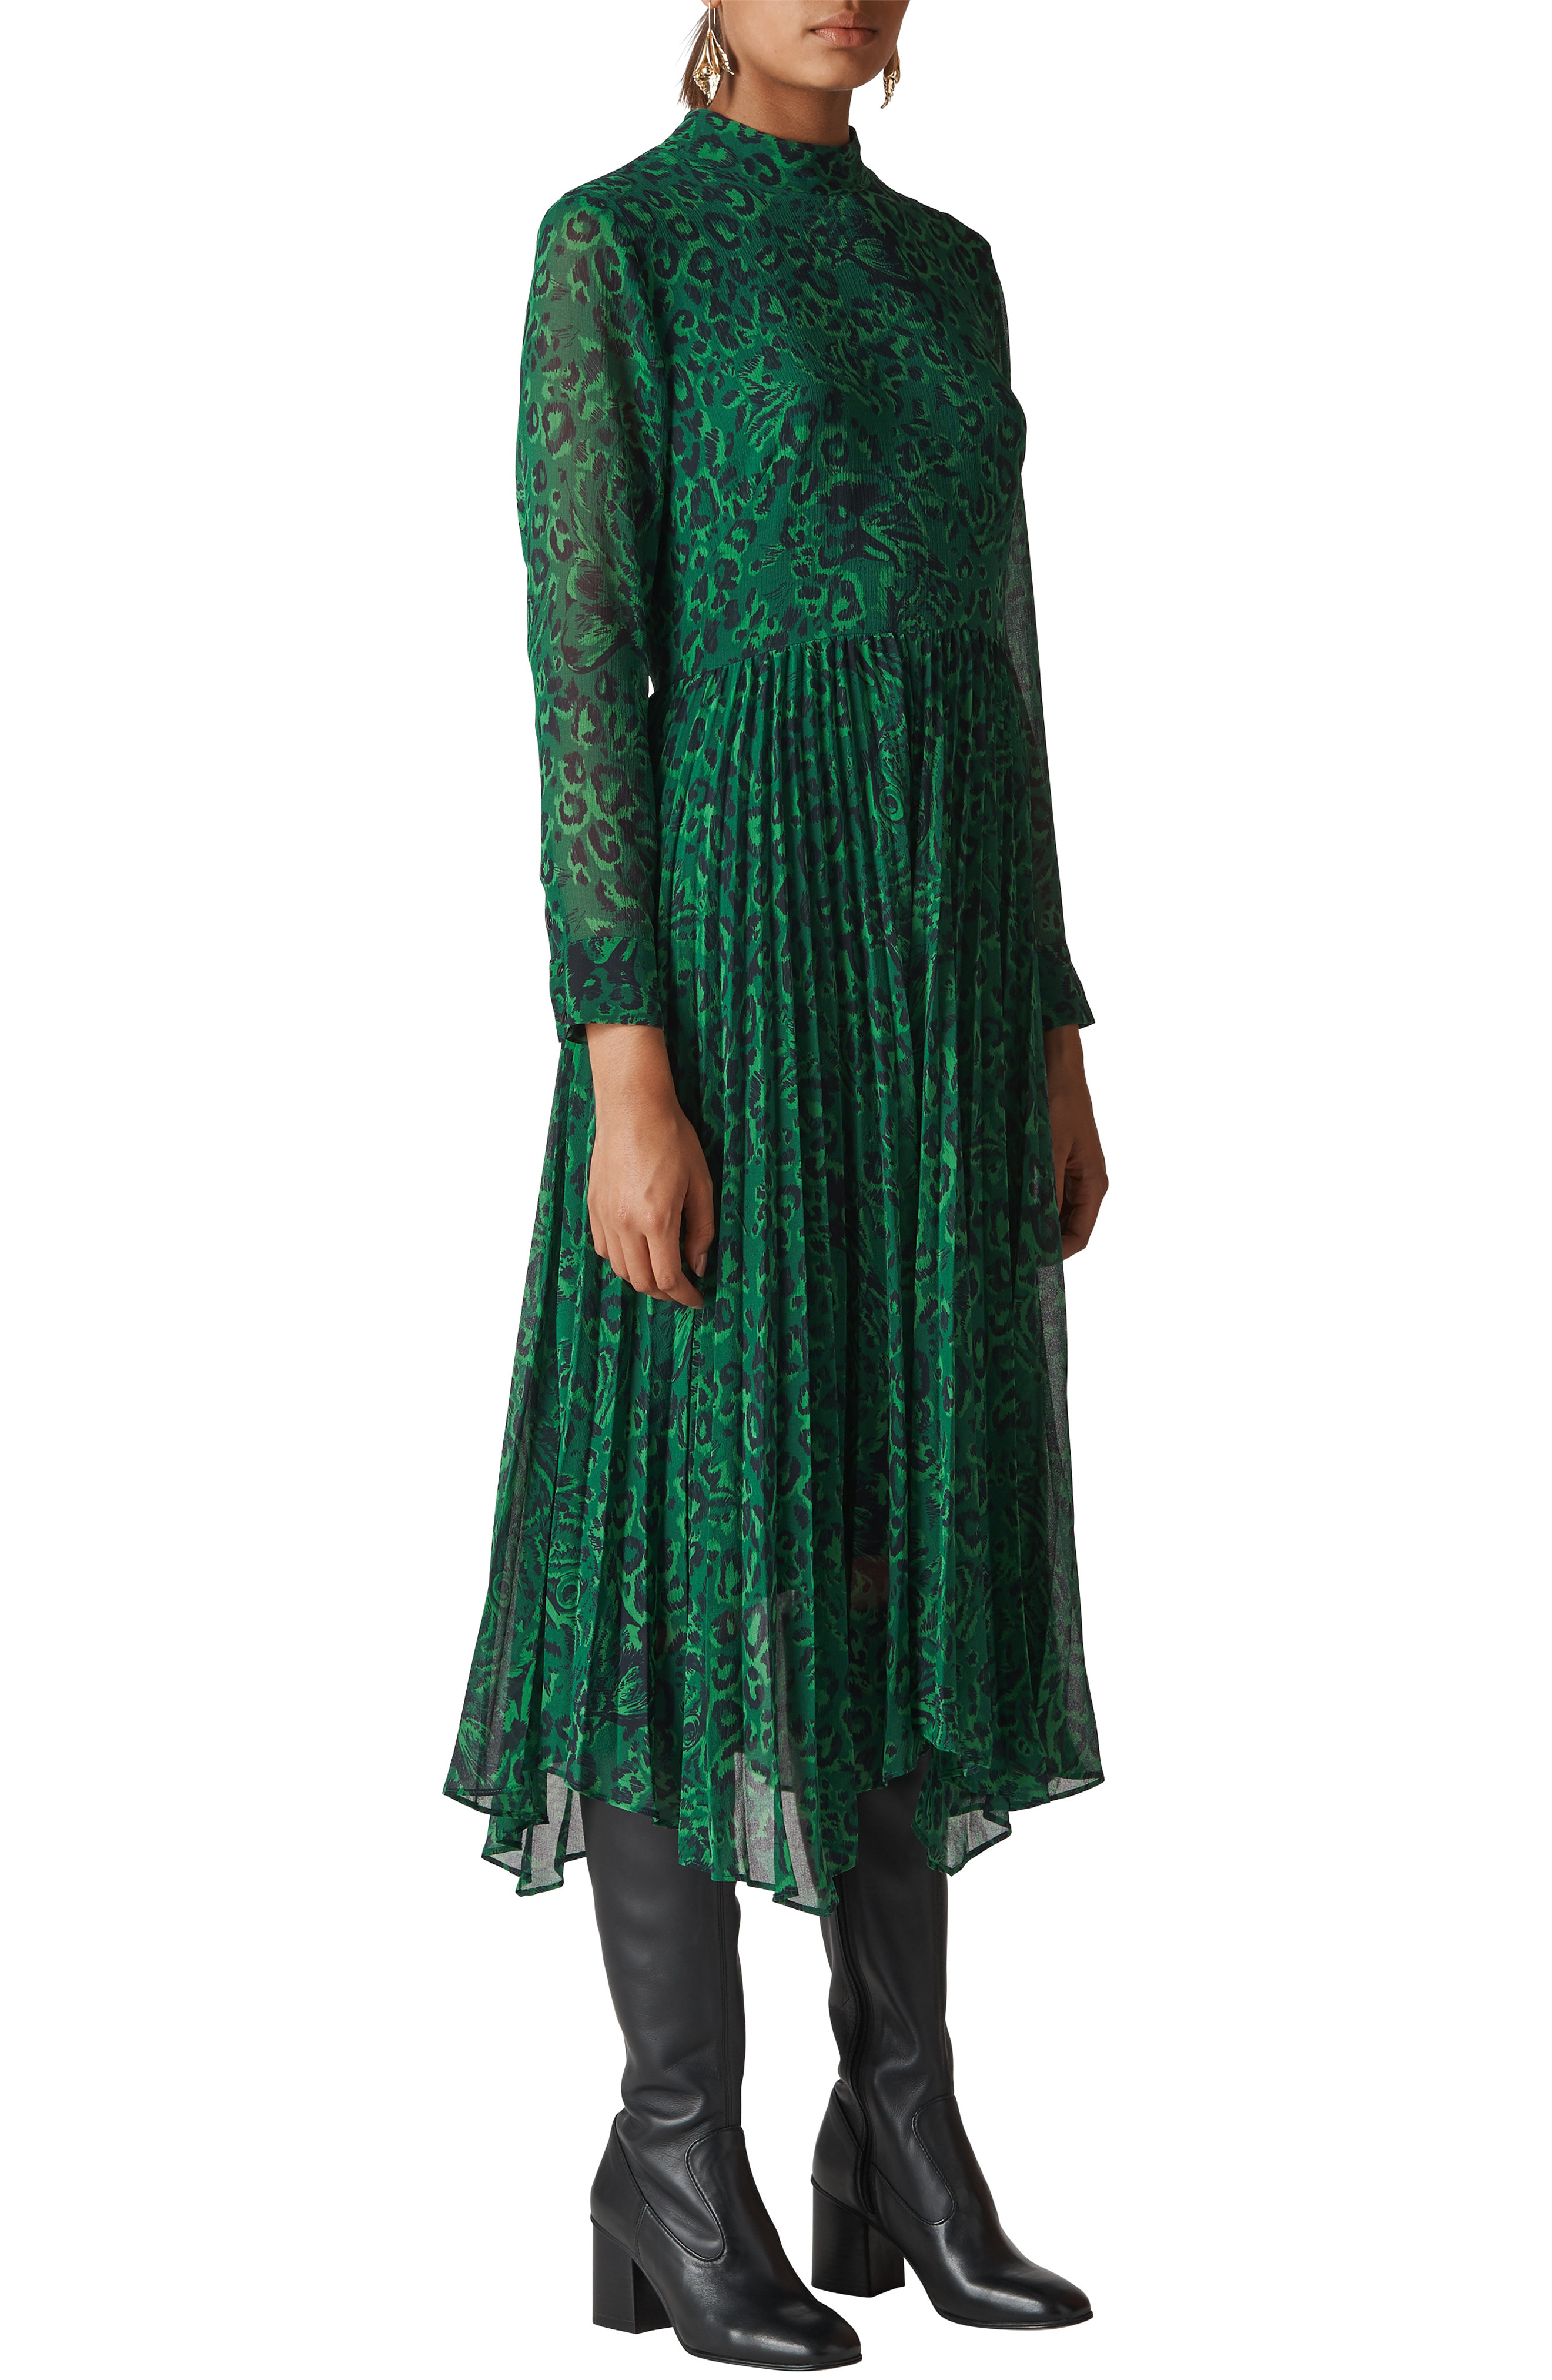 green leopard print dress whistles